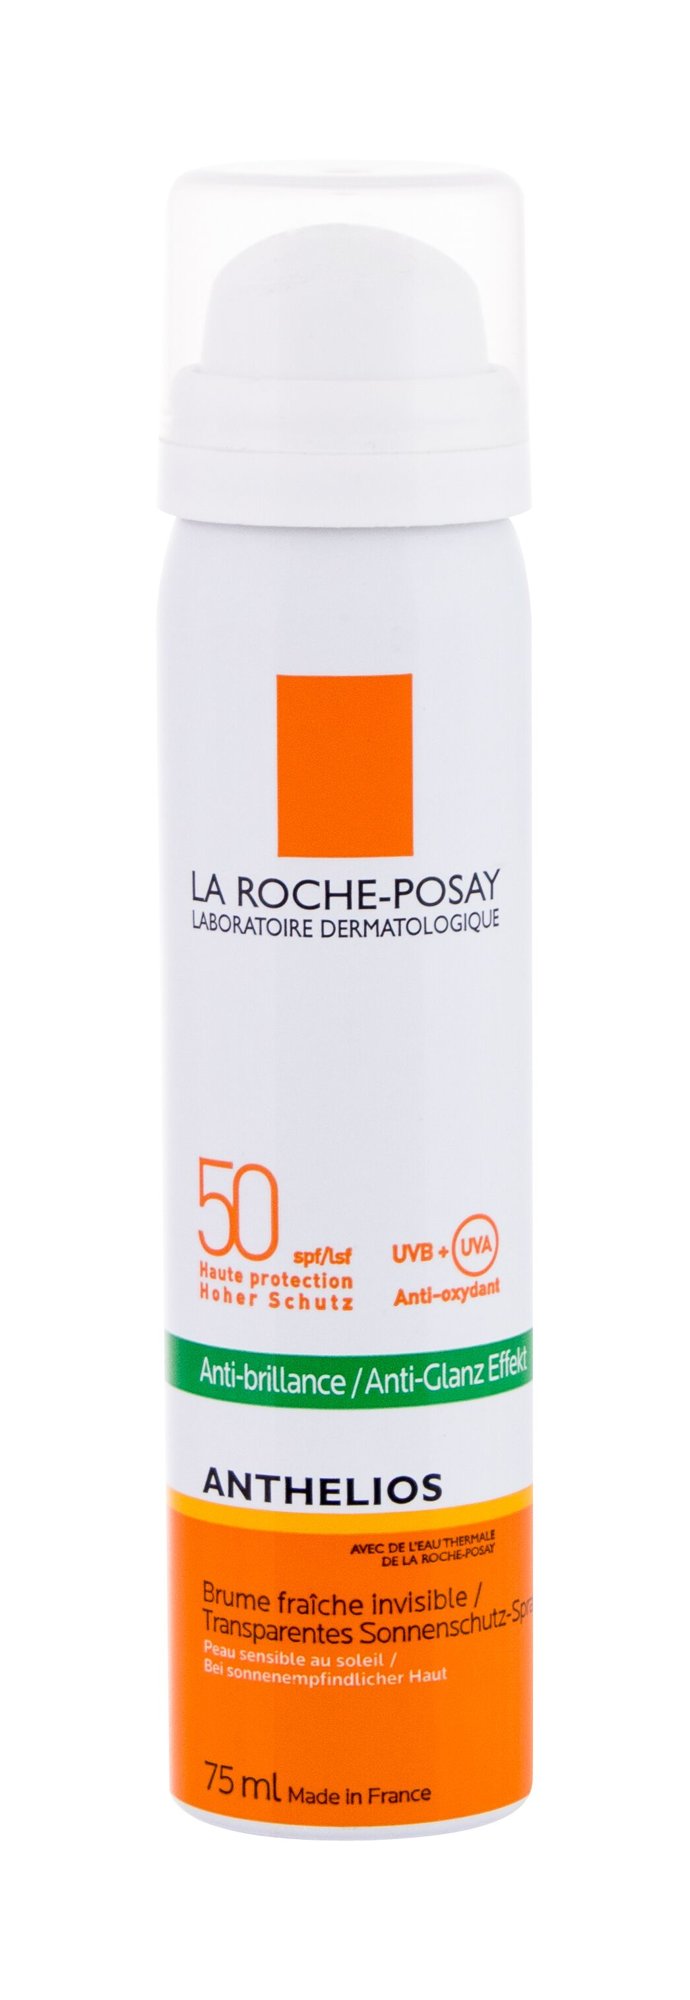 La Roche-Posay Anthelios Anti-Shine 75ml veido apsauga